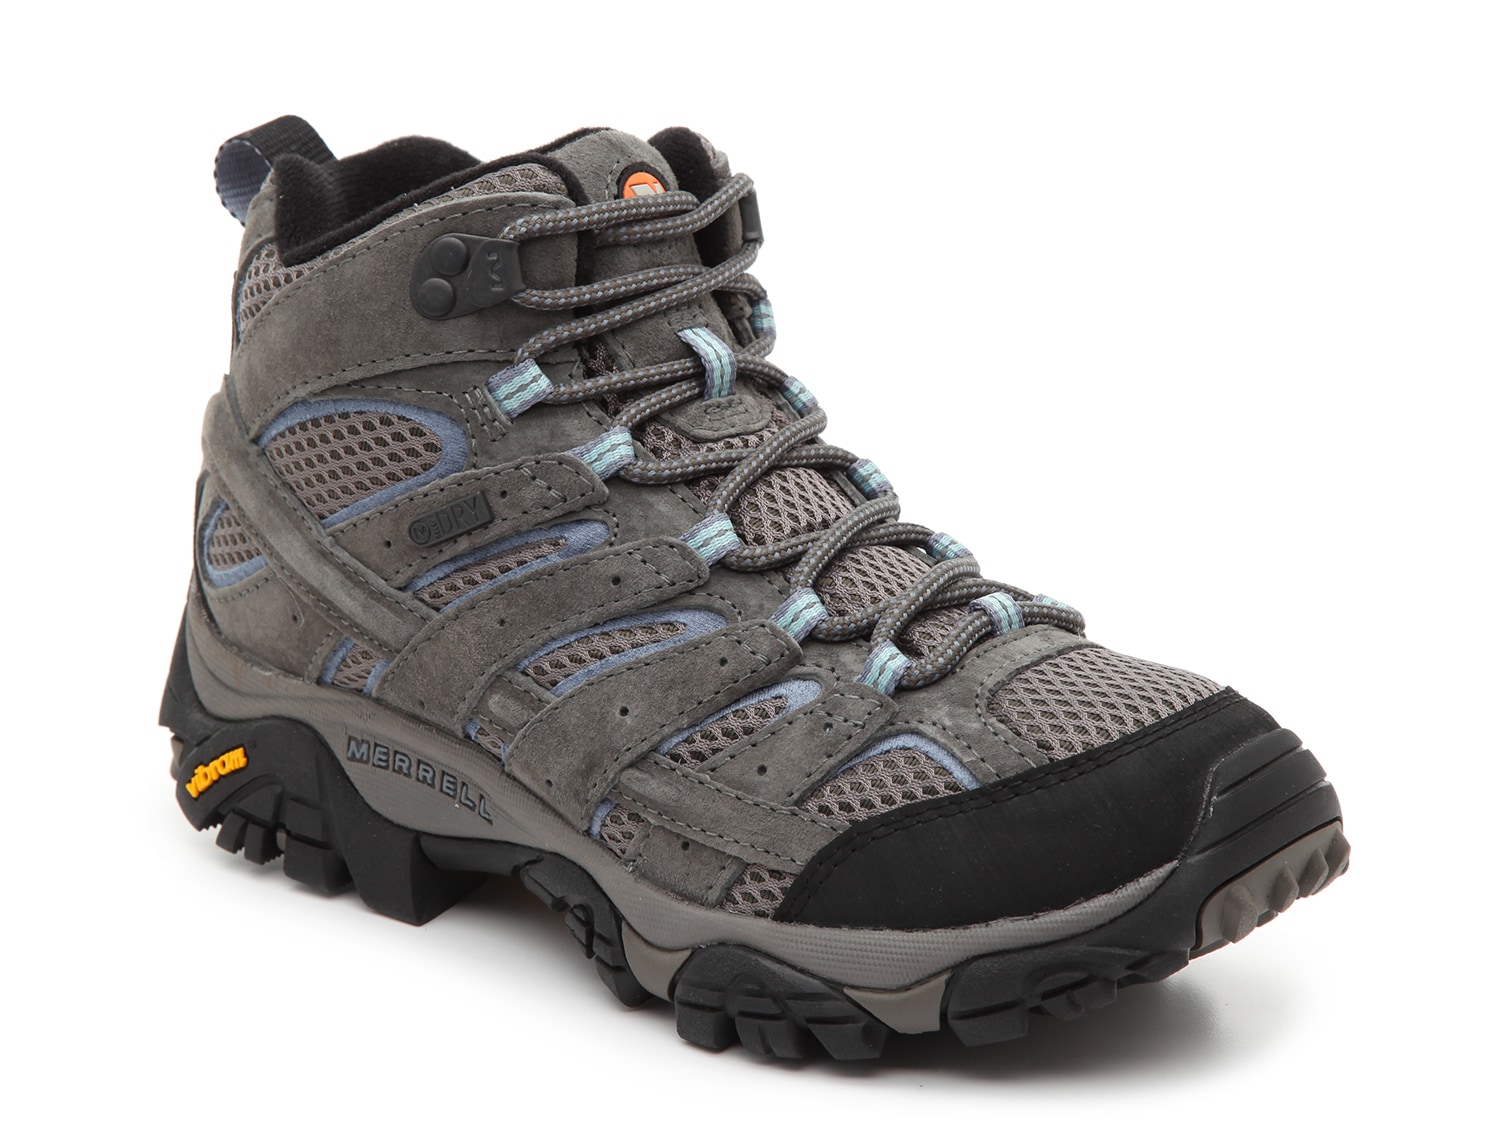 Merrell Moab Vent Waterproof Hiking Boot - Women's - Free |